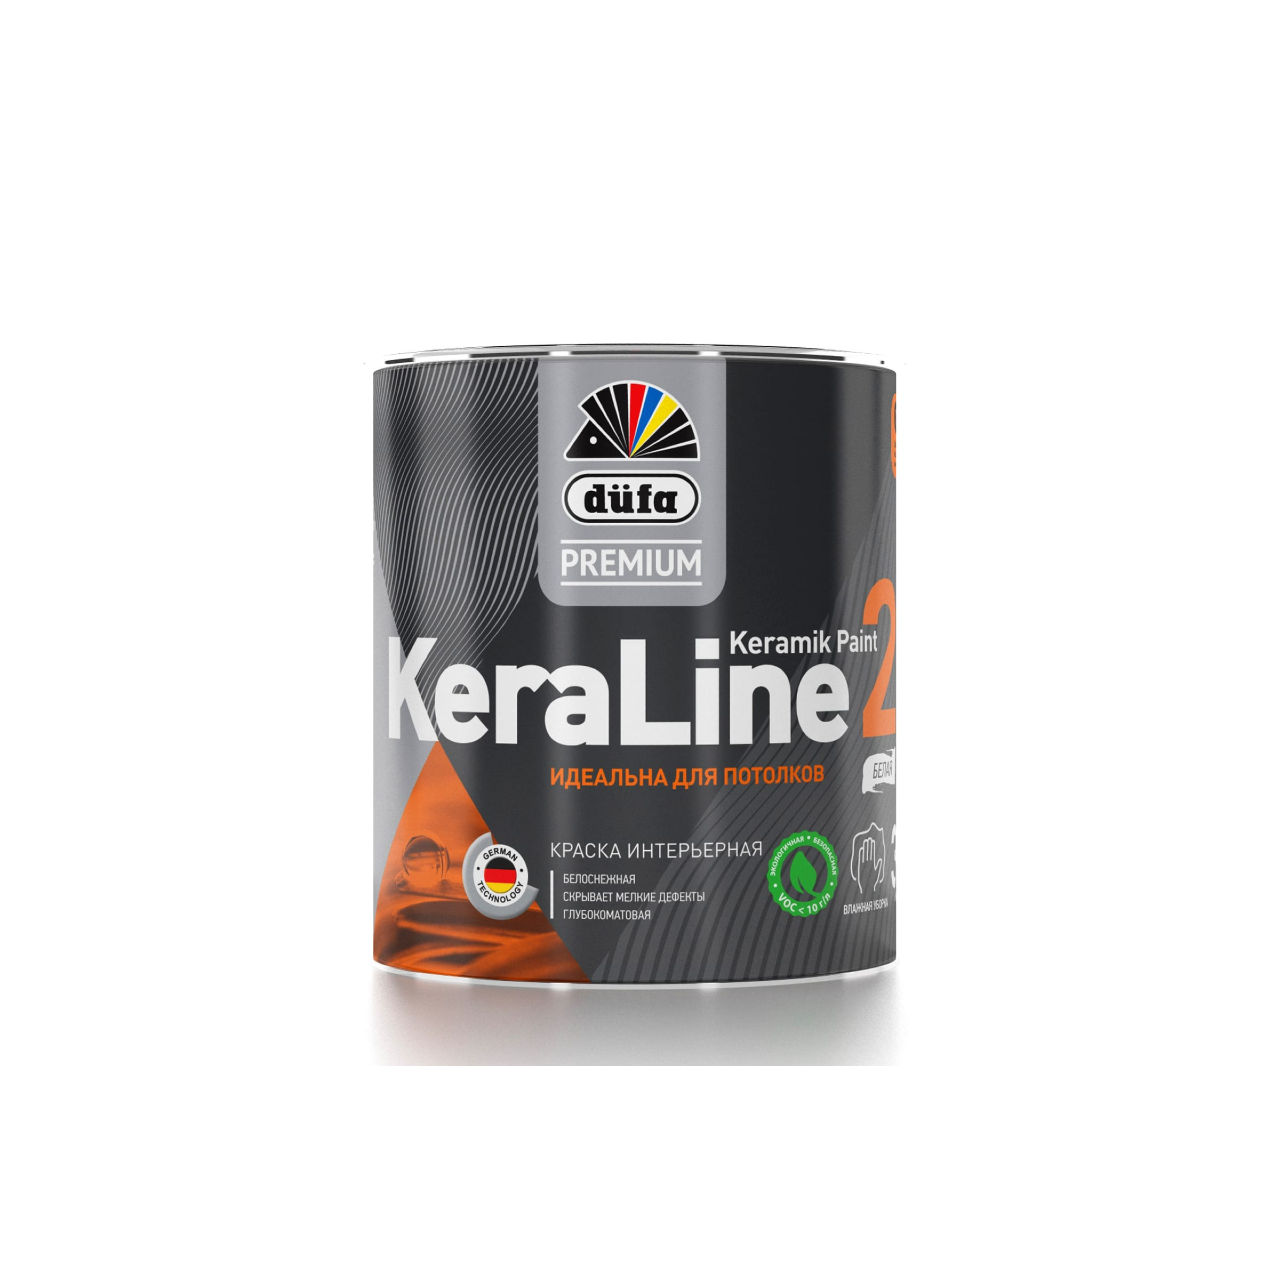 90190633 Краска для потолков Premium KeraLine Keramik Paint 2 глубокоматовая белая база 1 0.9 л STLM-0126780 DUFA